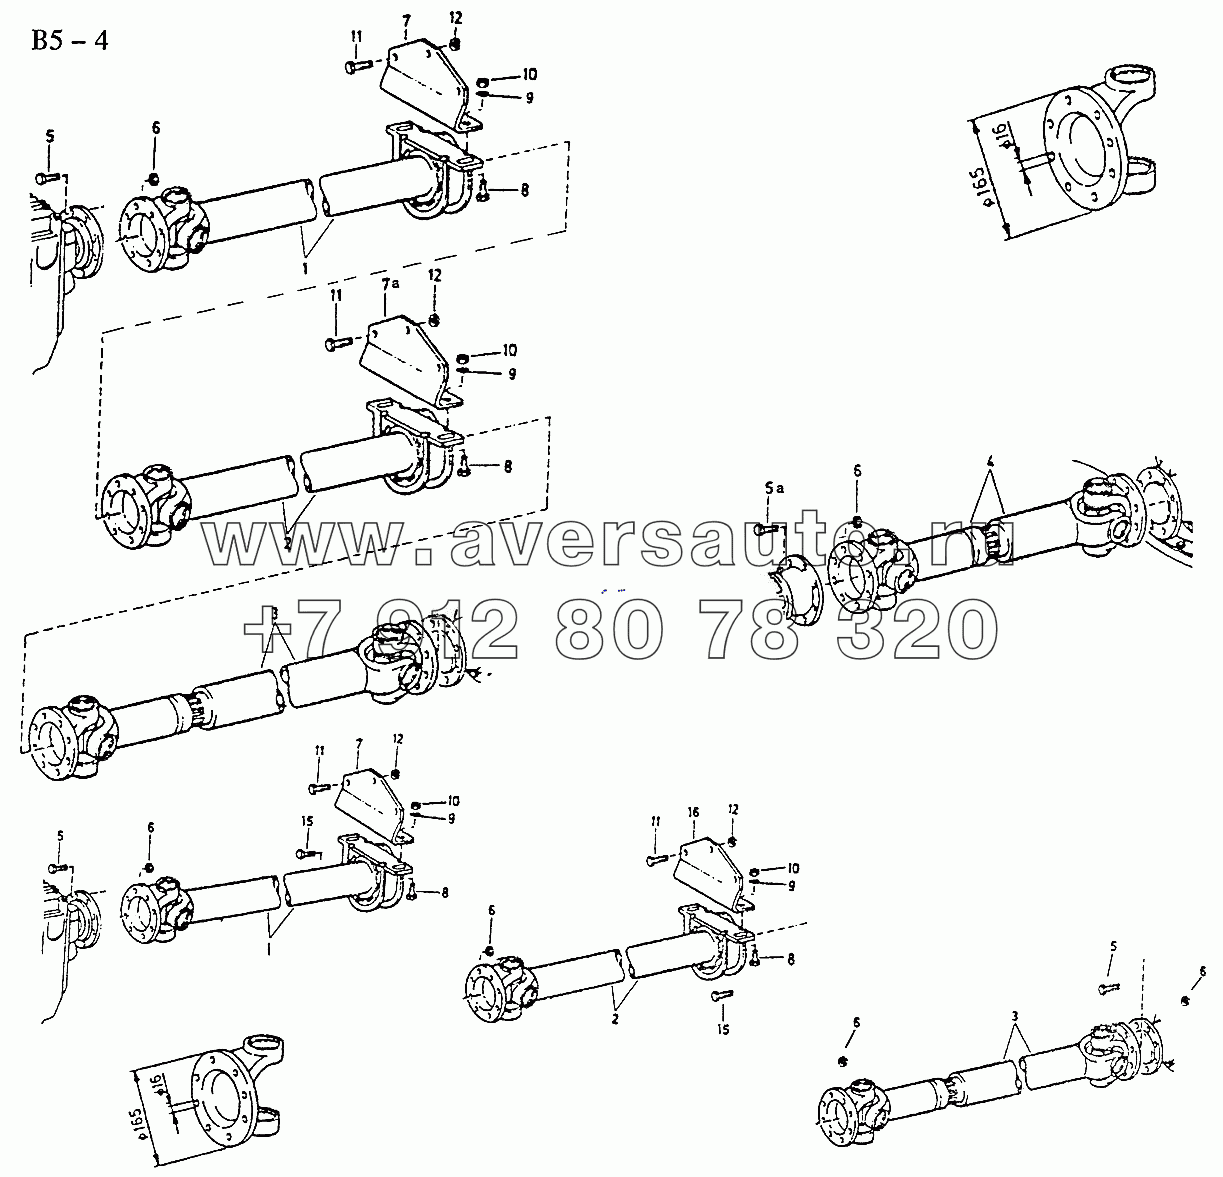 6x4, 8x4 PROPELLER SHAFTS FOR LONG WHEEL BASE 266, 290, 336/O46/8x4 (Fuller gearbox) (B5-4-1)